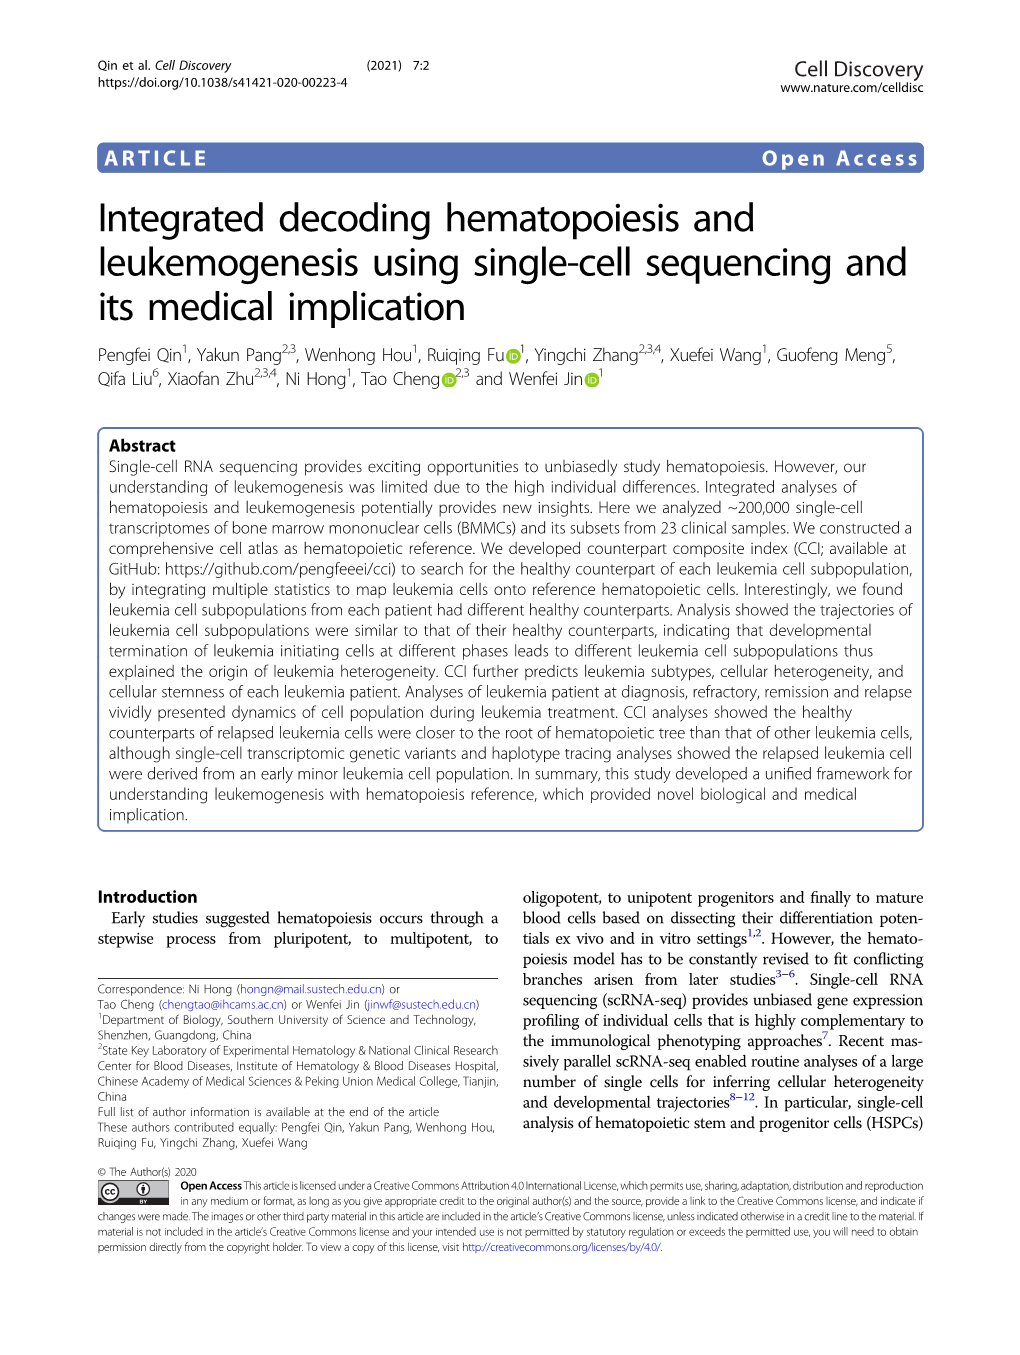 Integrated Decoding Hematopoiesis and Leukemogenesis Using Single